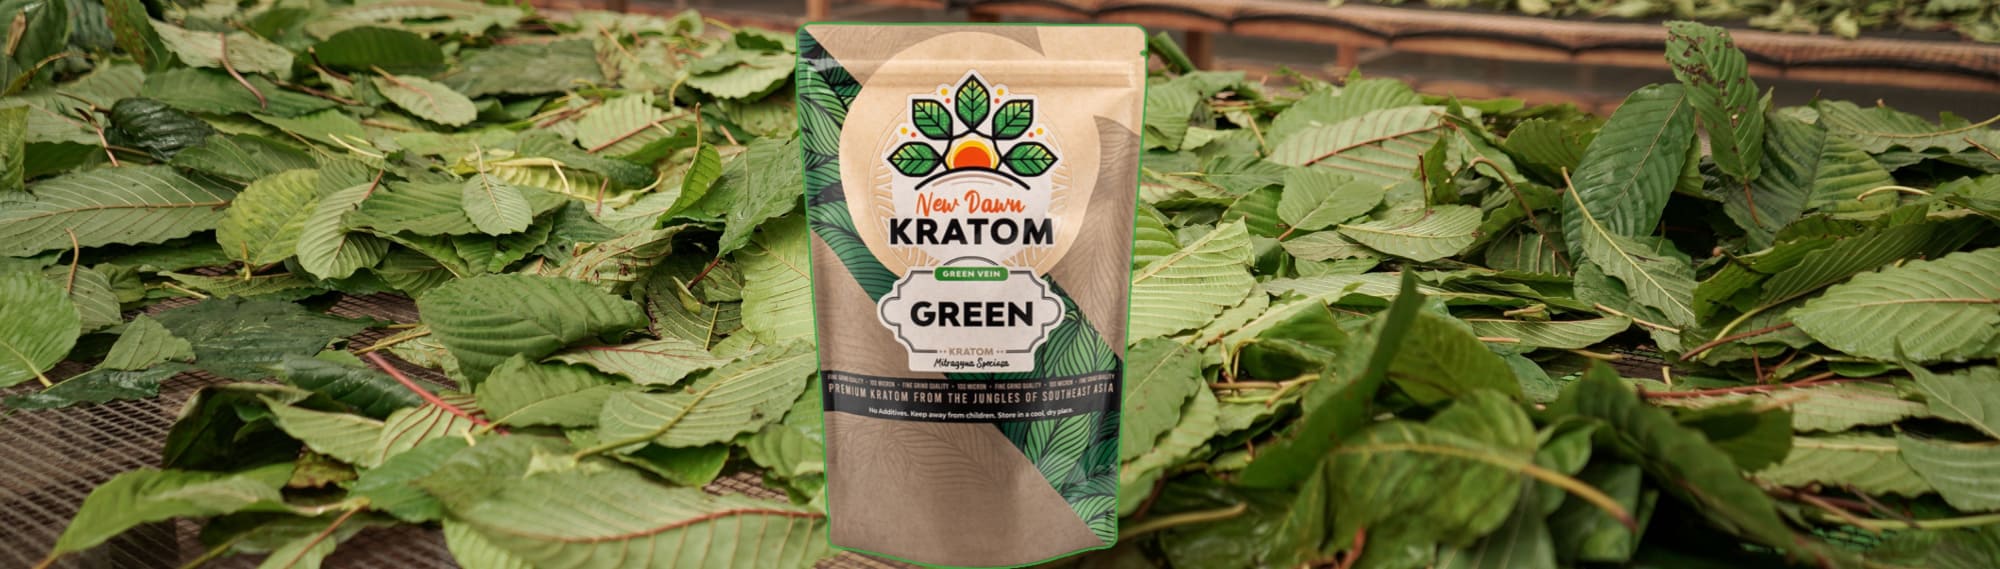 image of green malay kratom